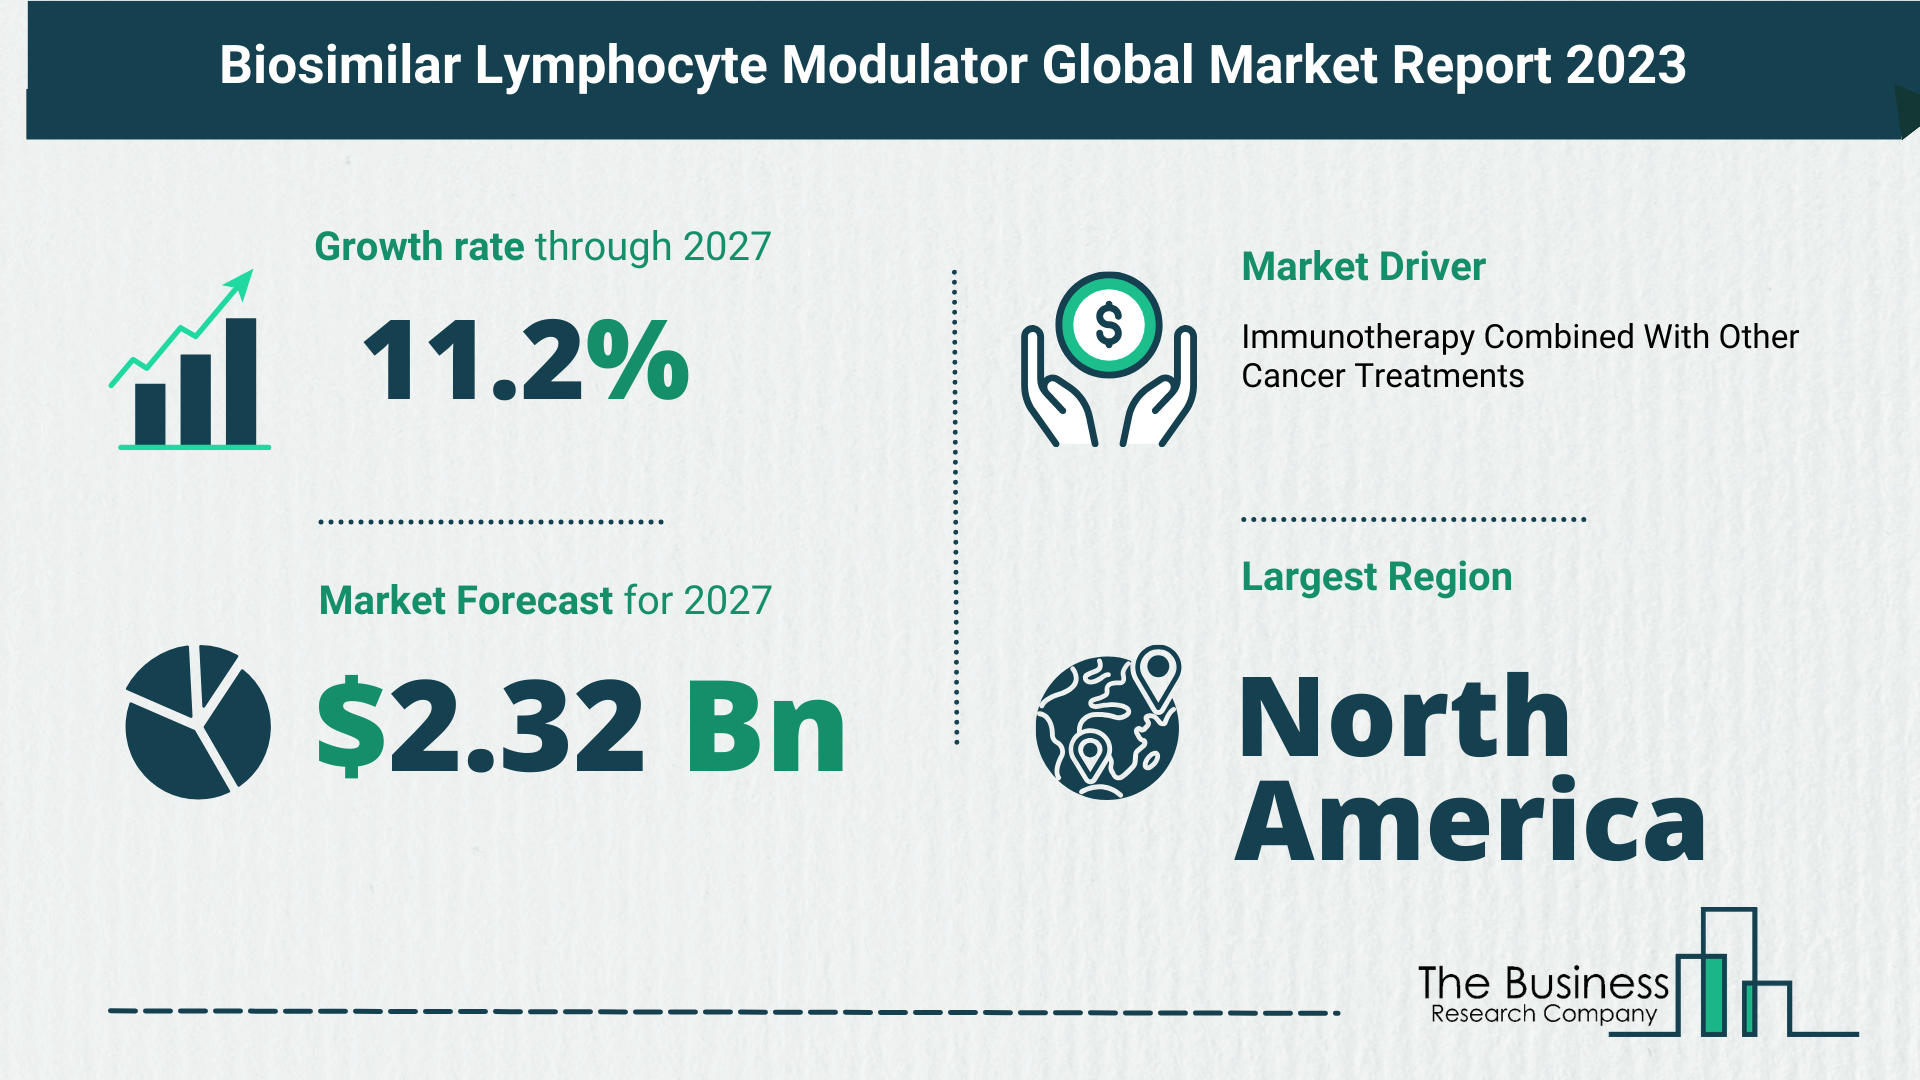 Key Trends And Drivers In The Biosimilar Lymphocyte Modulator Market 2023